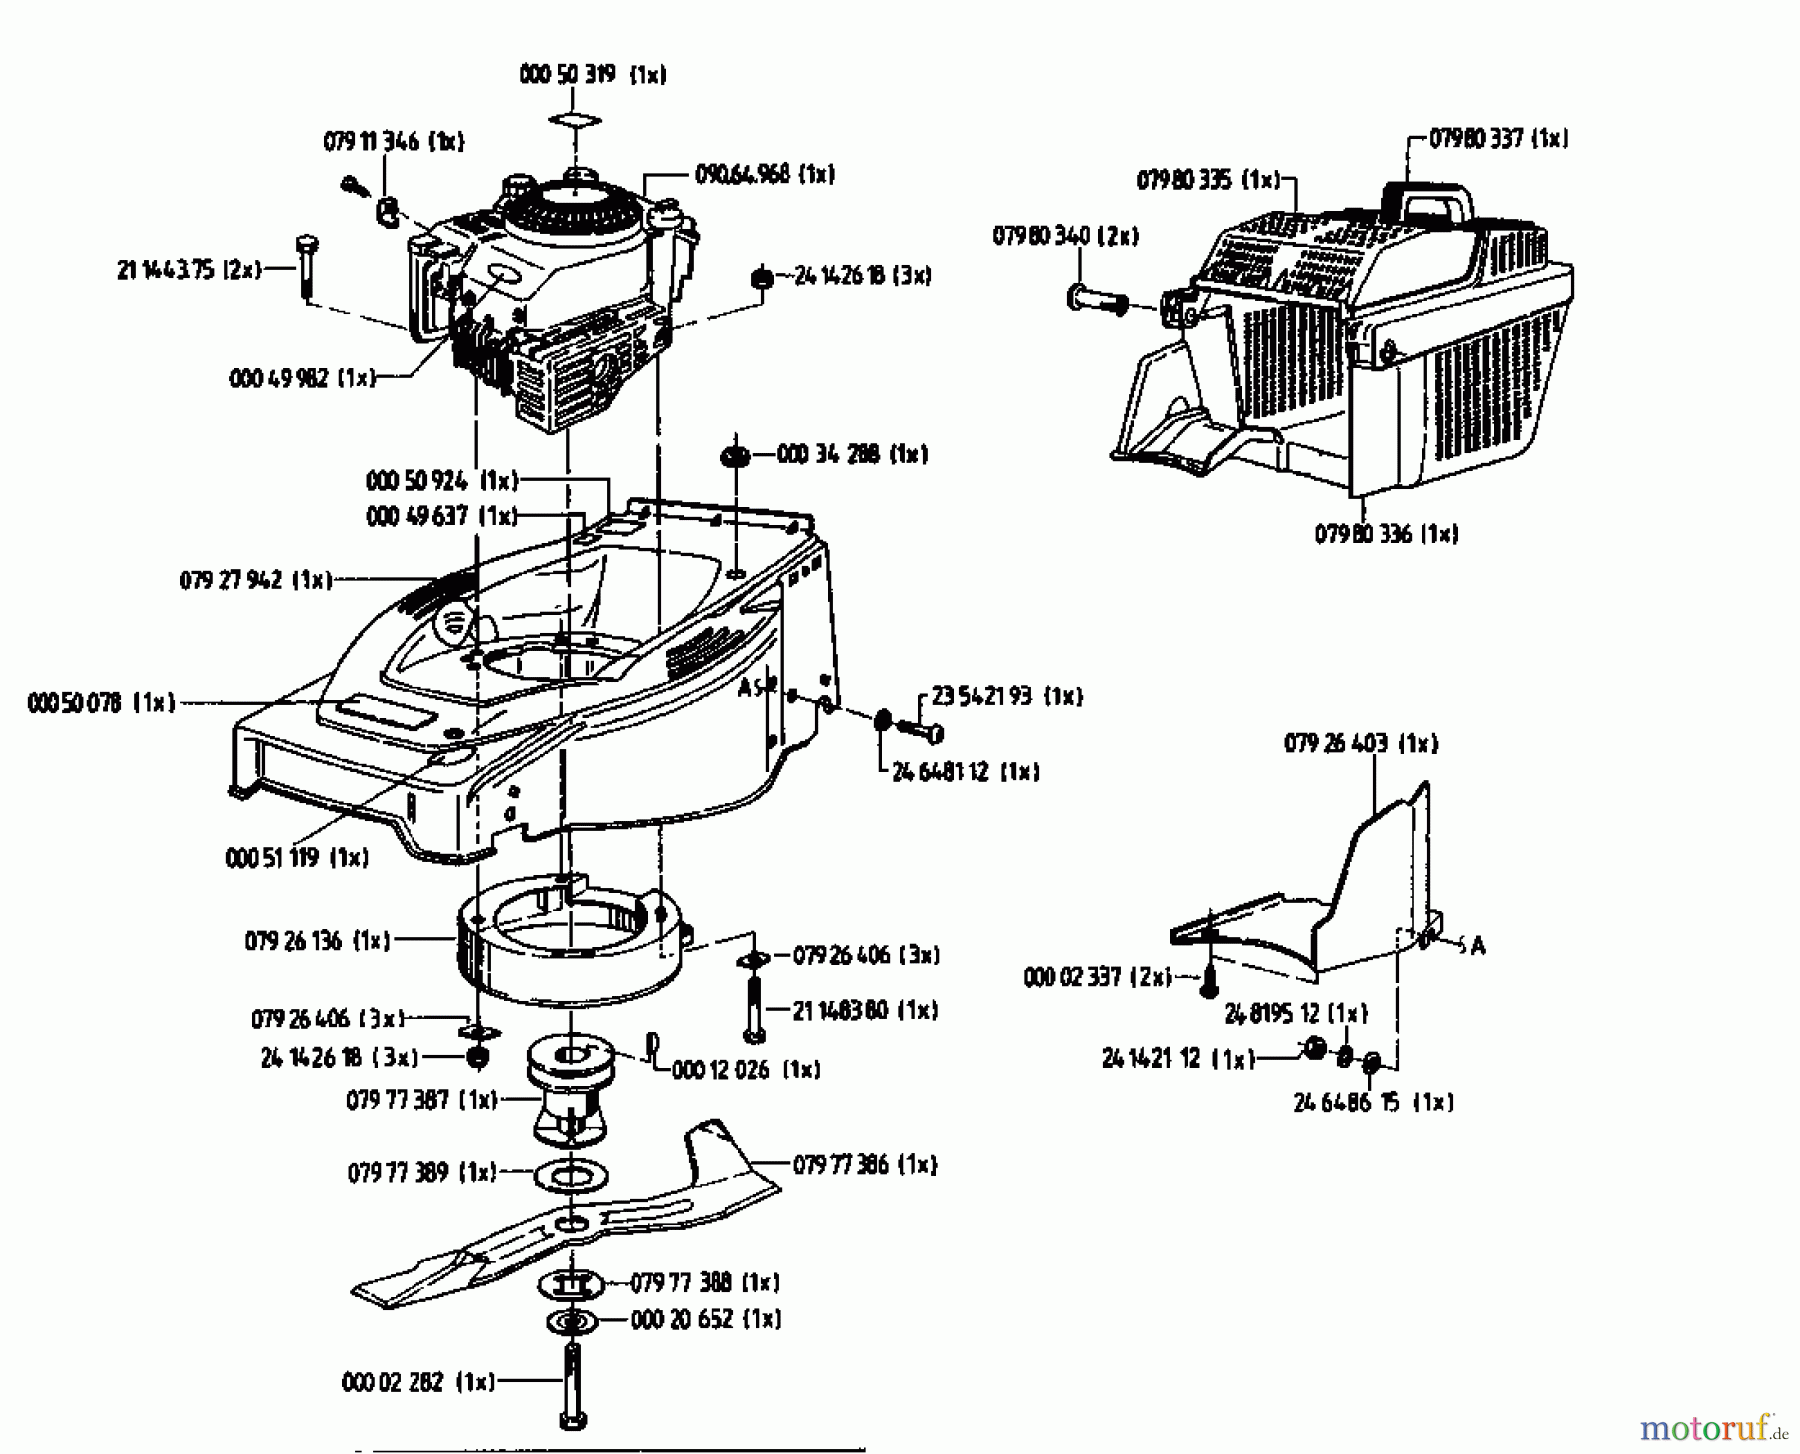  Gutbrod Petrol mower self propelled HB 48 RL 02815.01  (1993) Basic machine